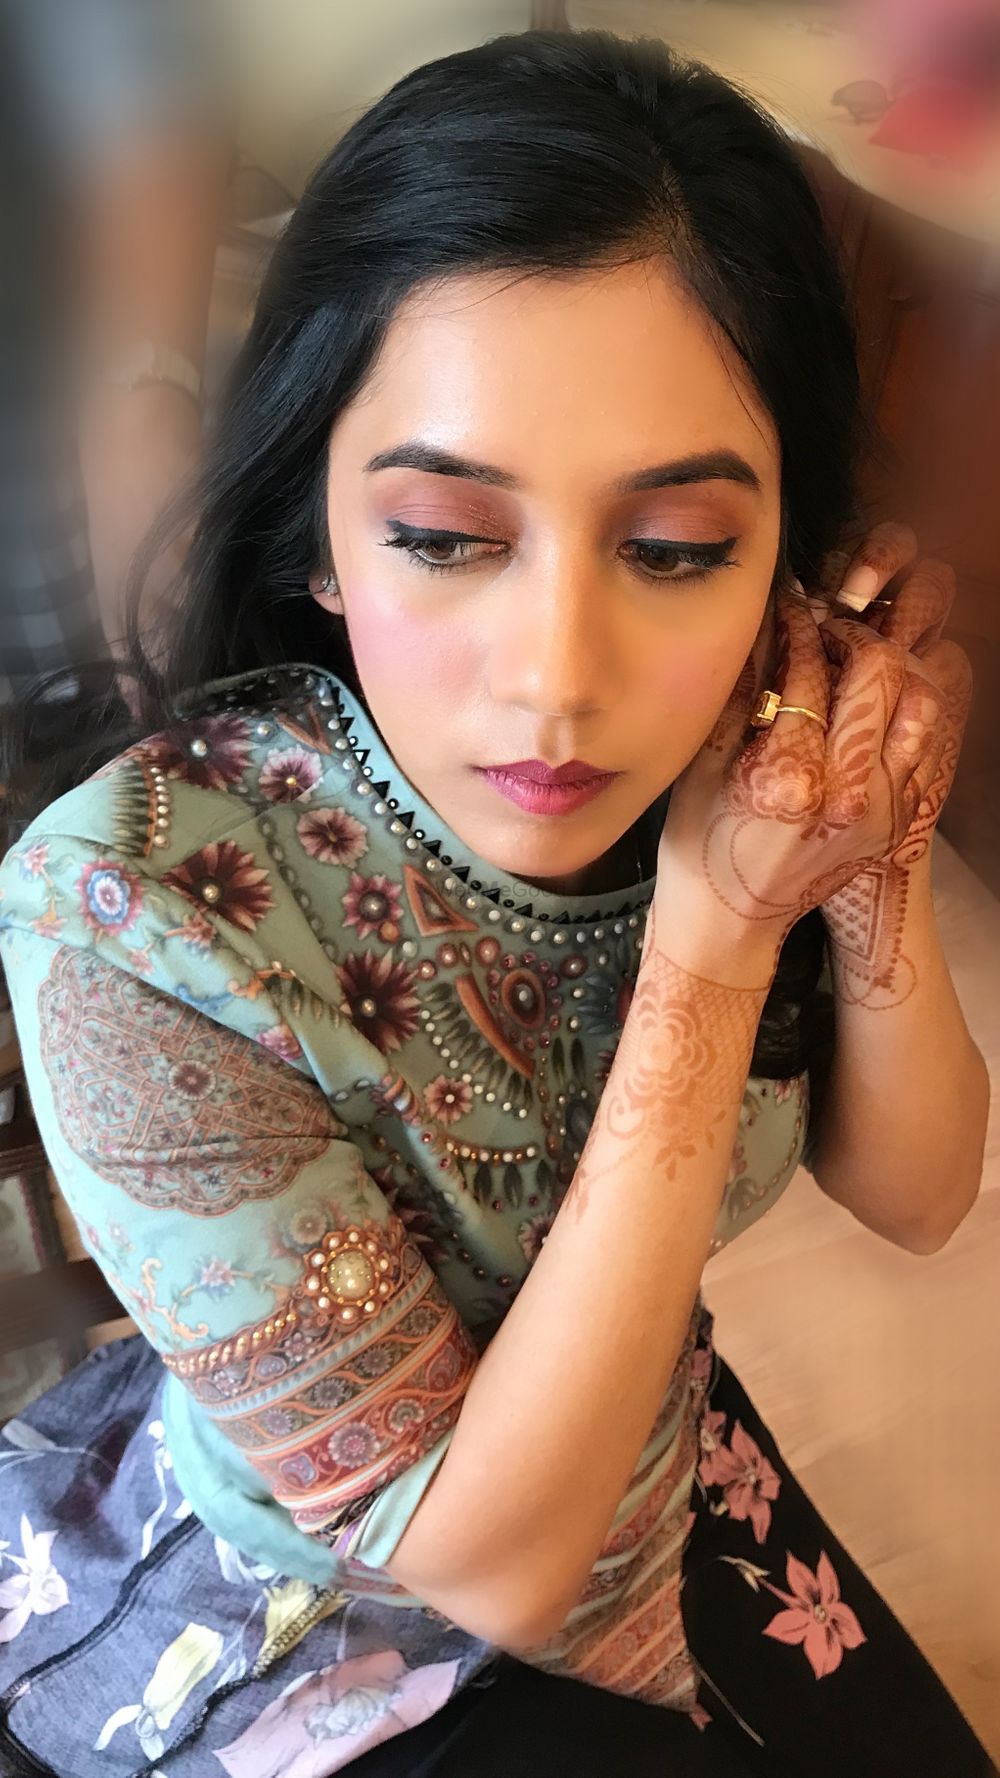 Photo By Anush Ali's Makeup Artistry - Bridal Makeup